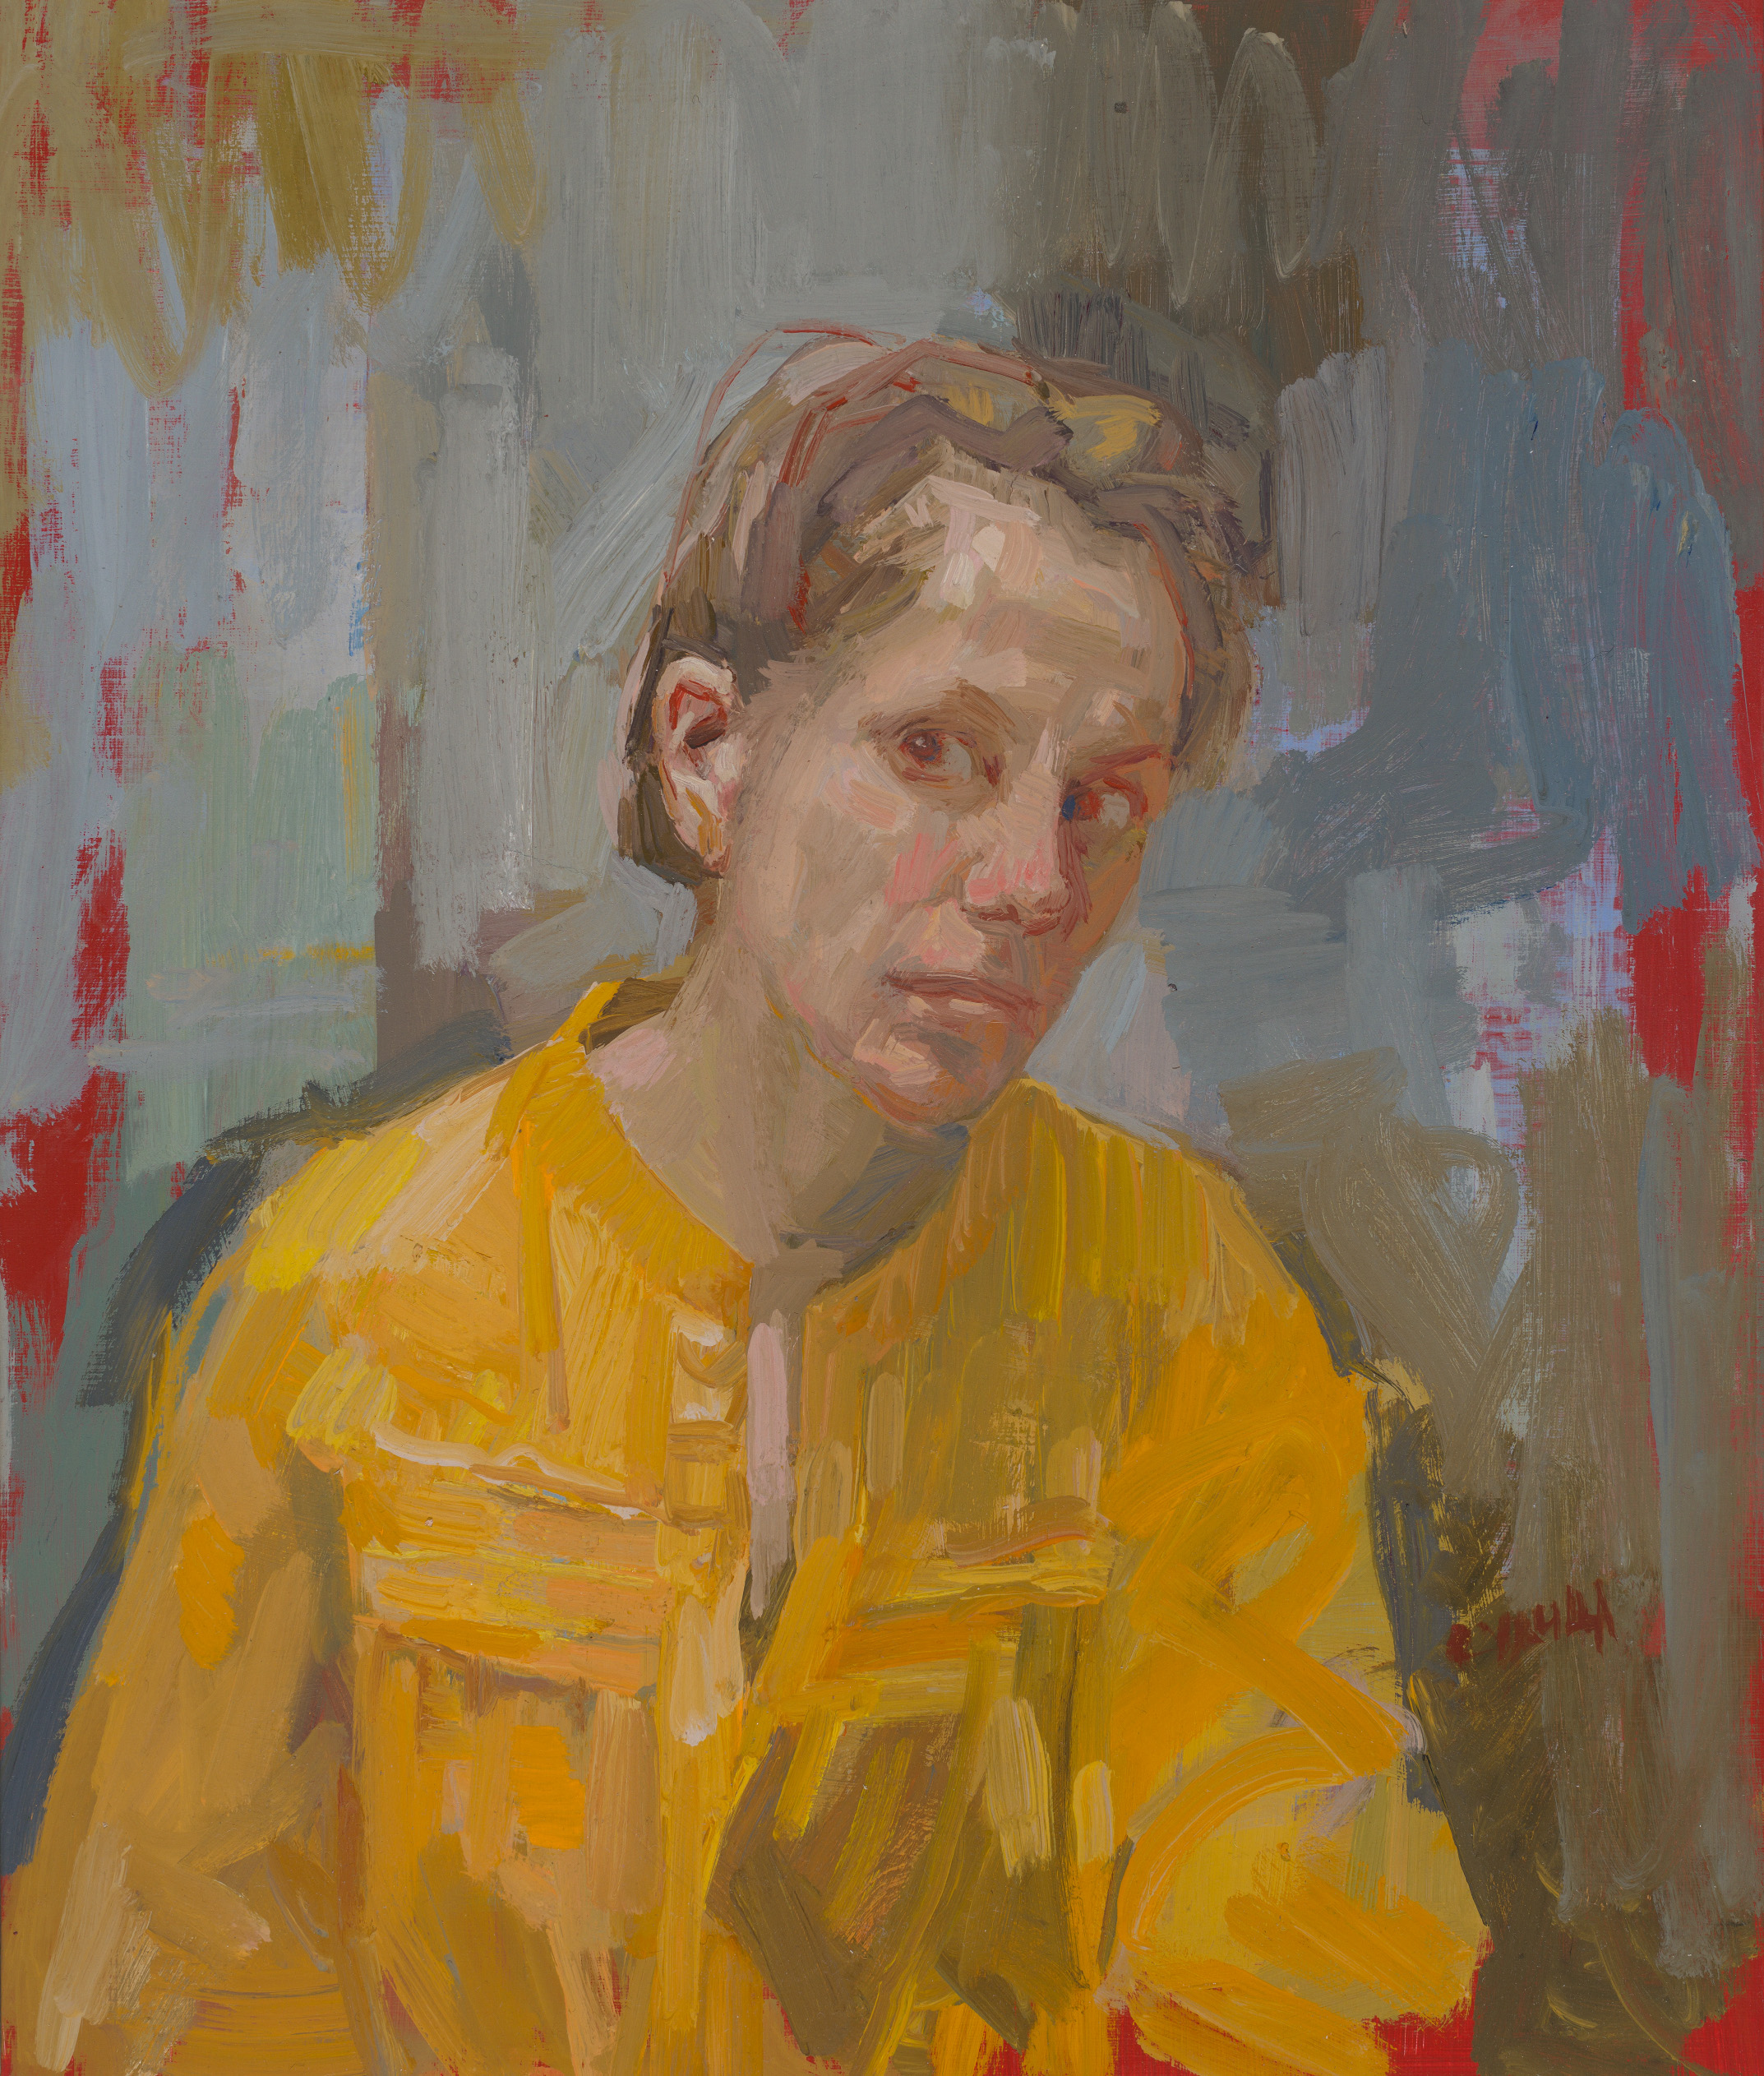 Dagmar Cyrulla 'Self portrait in yellow shirt' oil on board 40 x 35cm PORTIA GEACH FINALIST $4,500